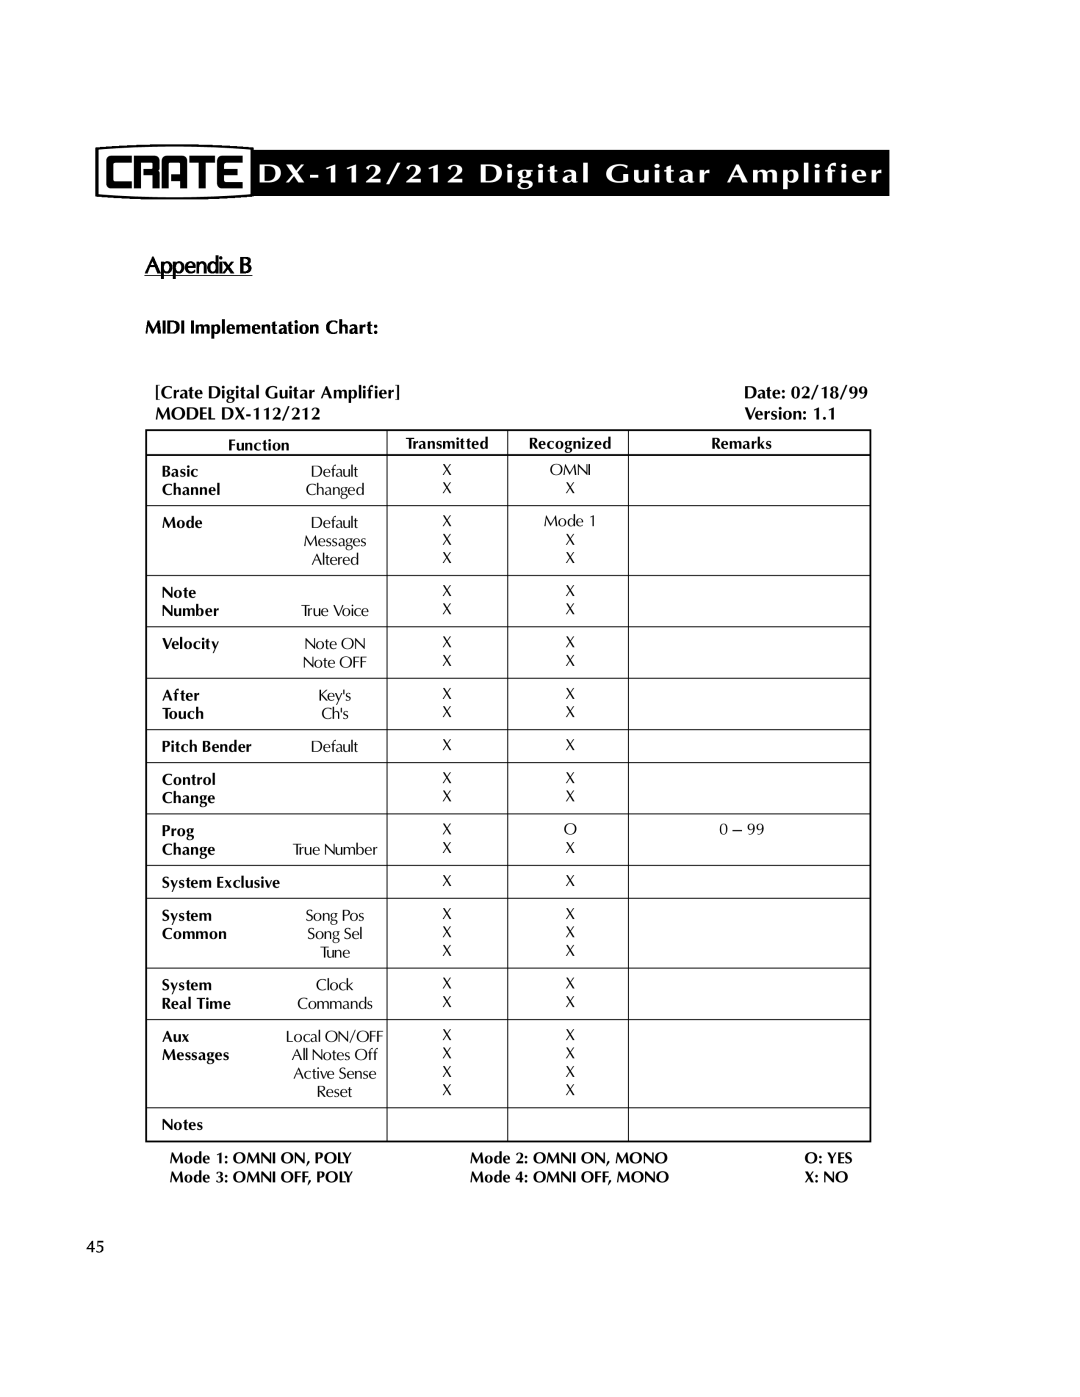 Crate Amplifiers DX-212 manual Appendix B, MIDI Implementation Chart, Date 02/18/99, MODEL DX-112/212, Version 